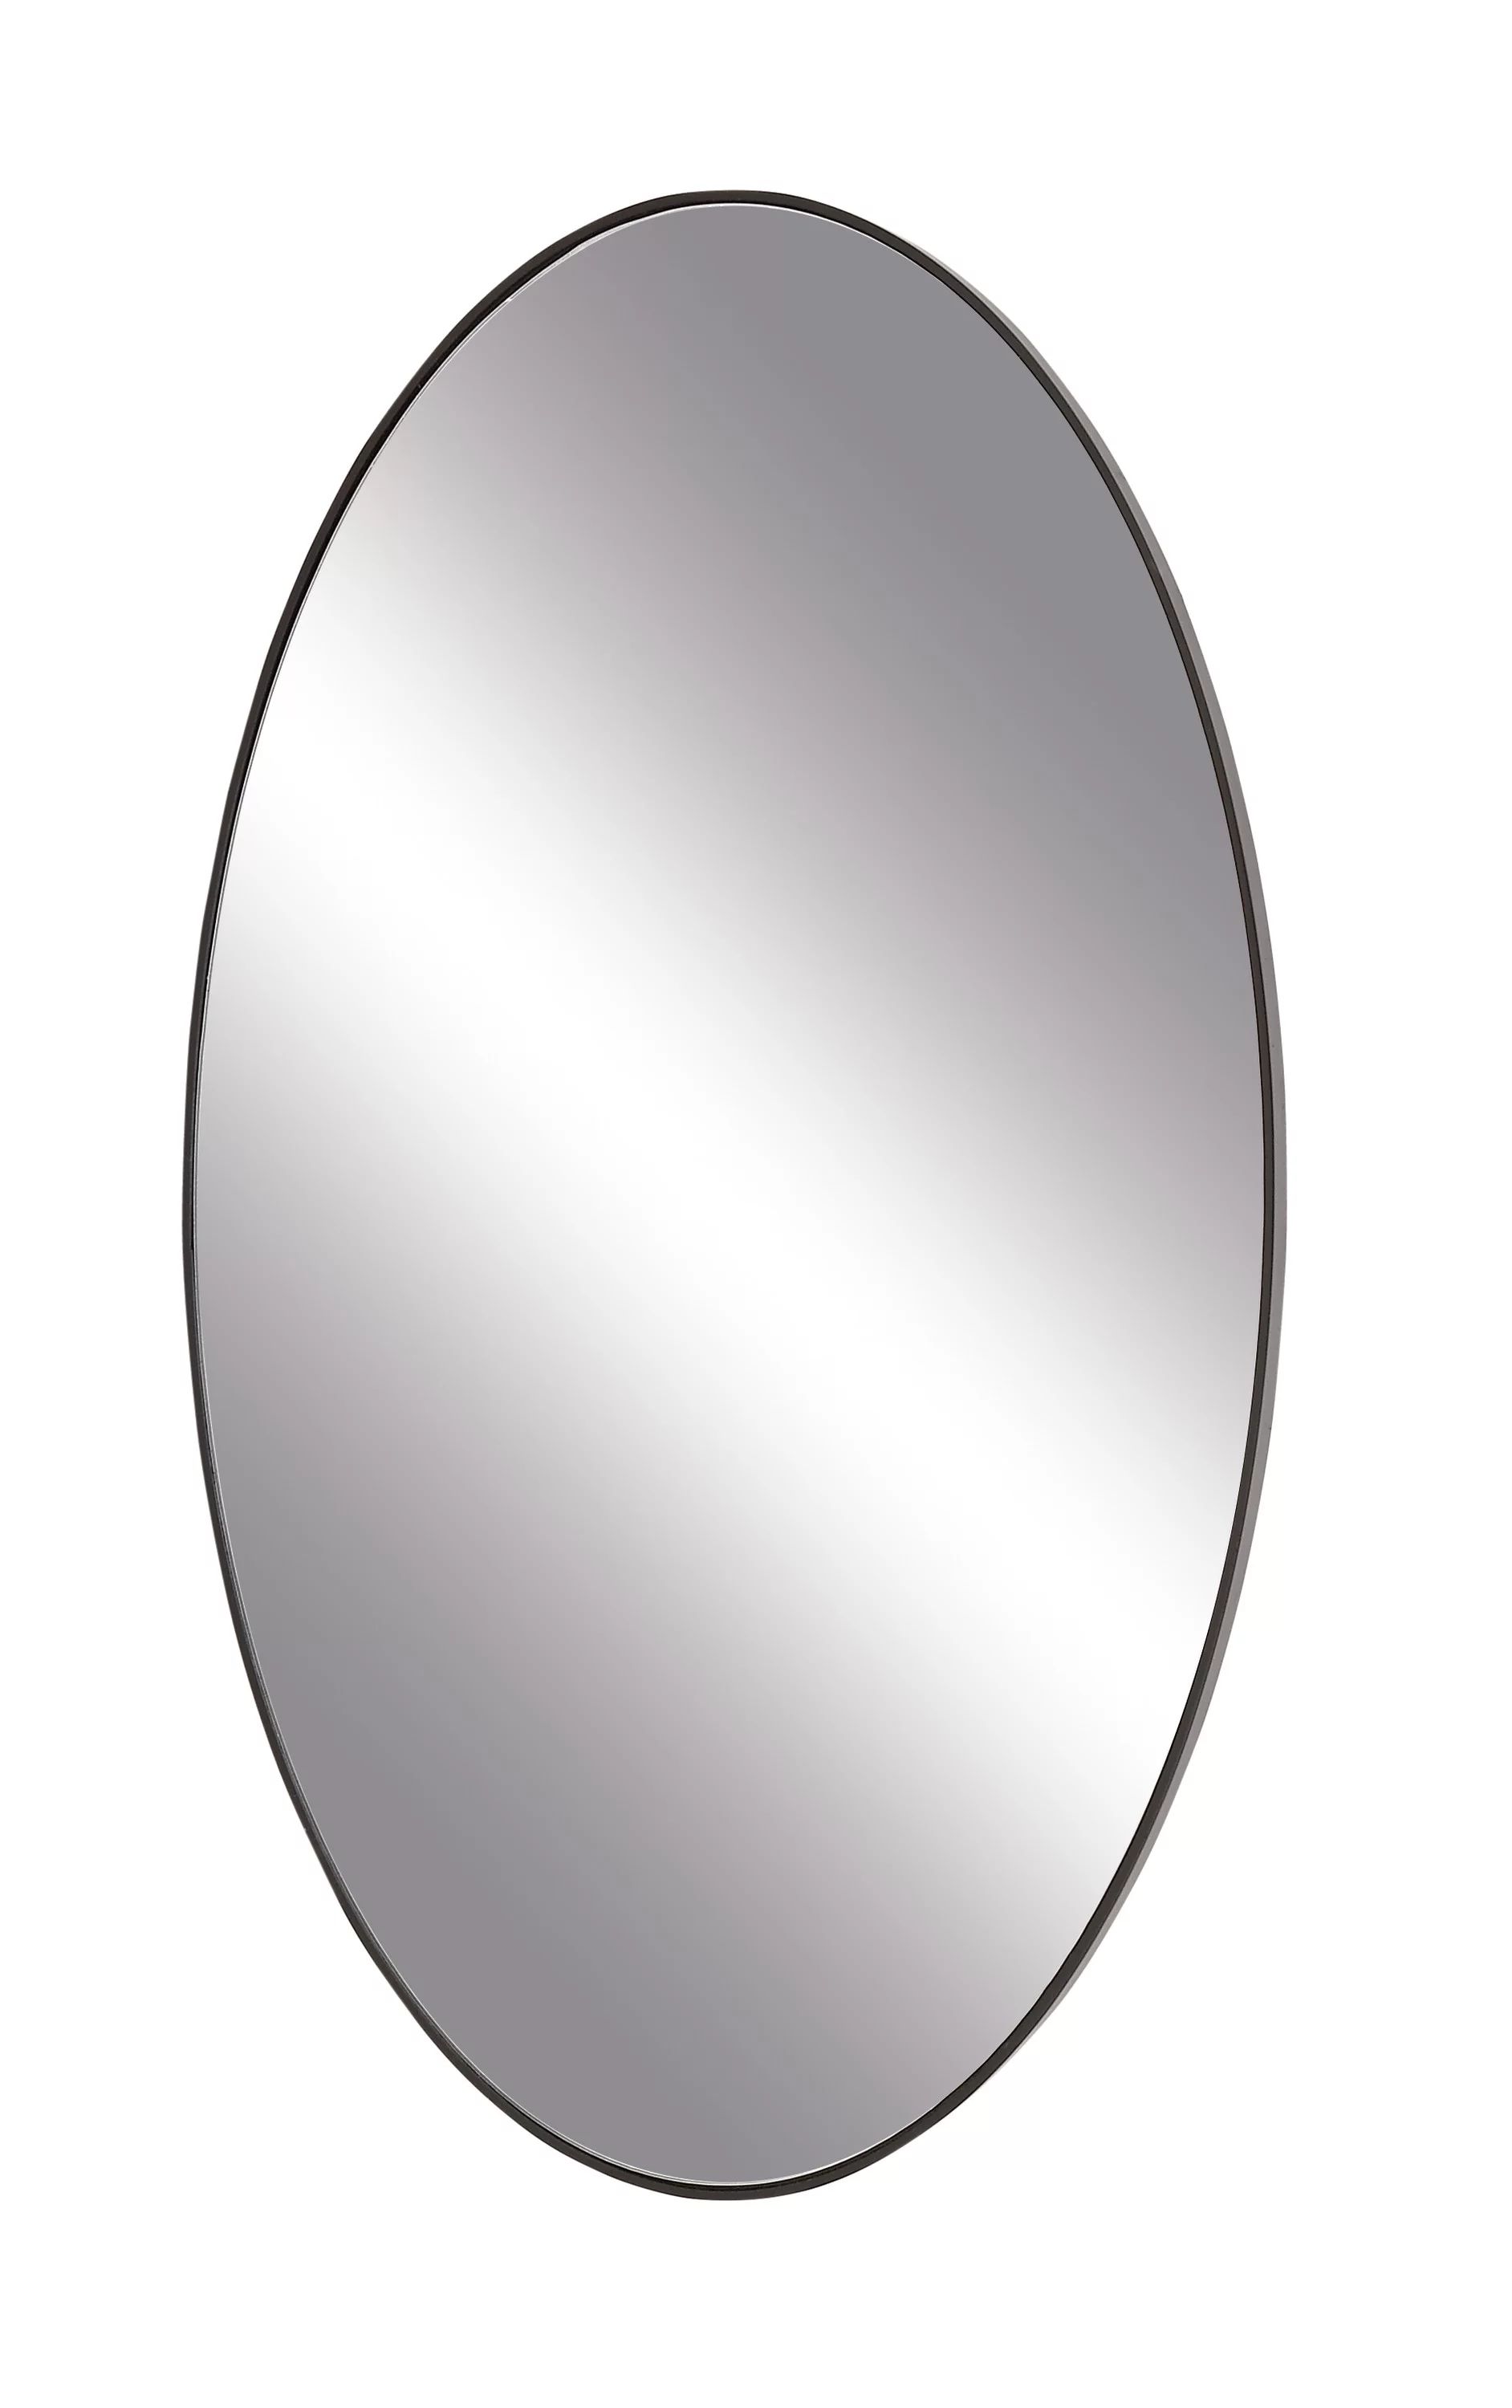 DecMode 18" x 31" Black Oval Shaped Wall Mirror with Thin Minimalistic Frame | Walmart (US)